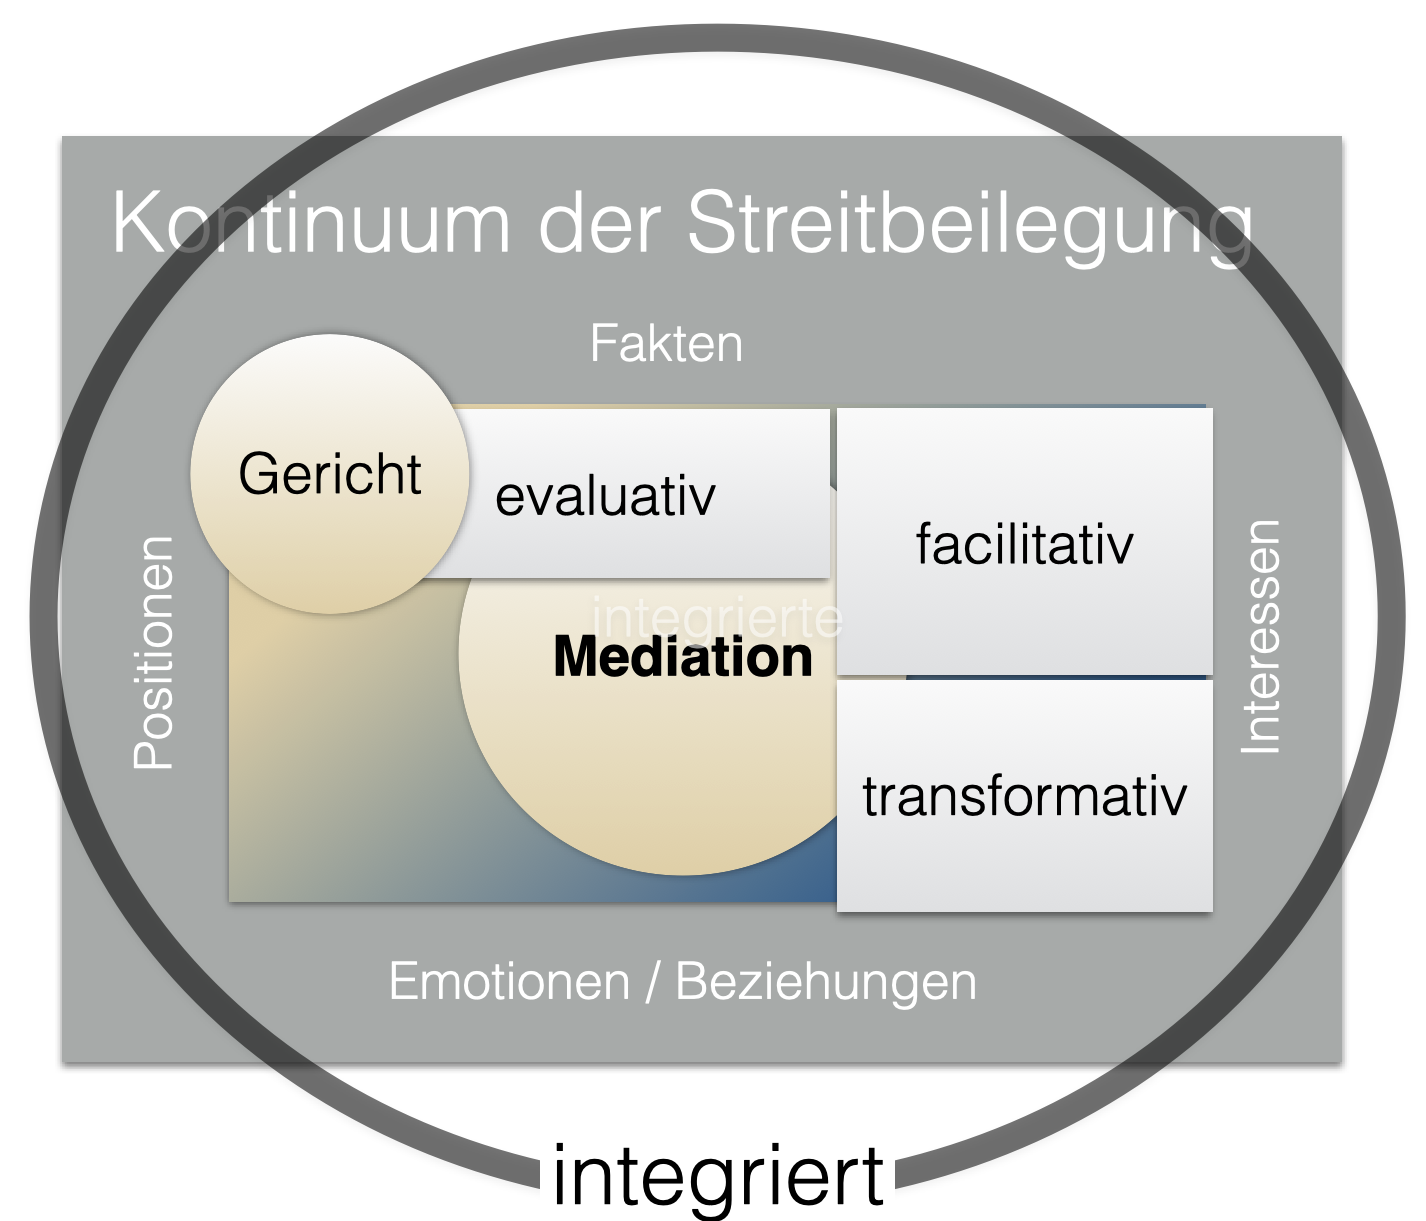 integrierte Mediation